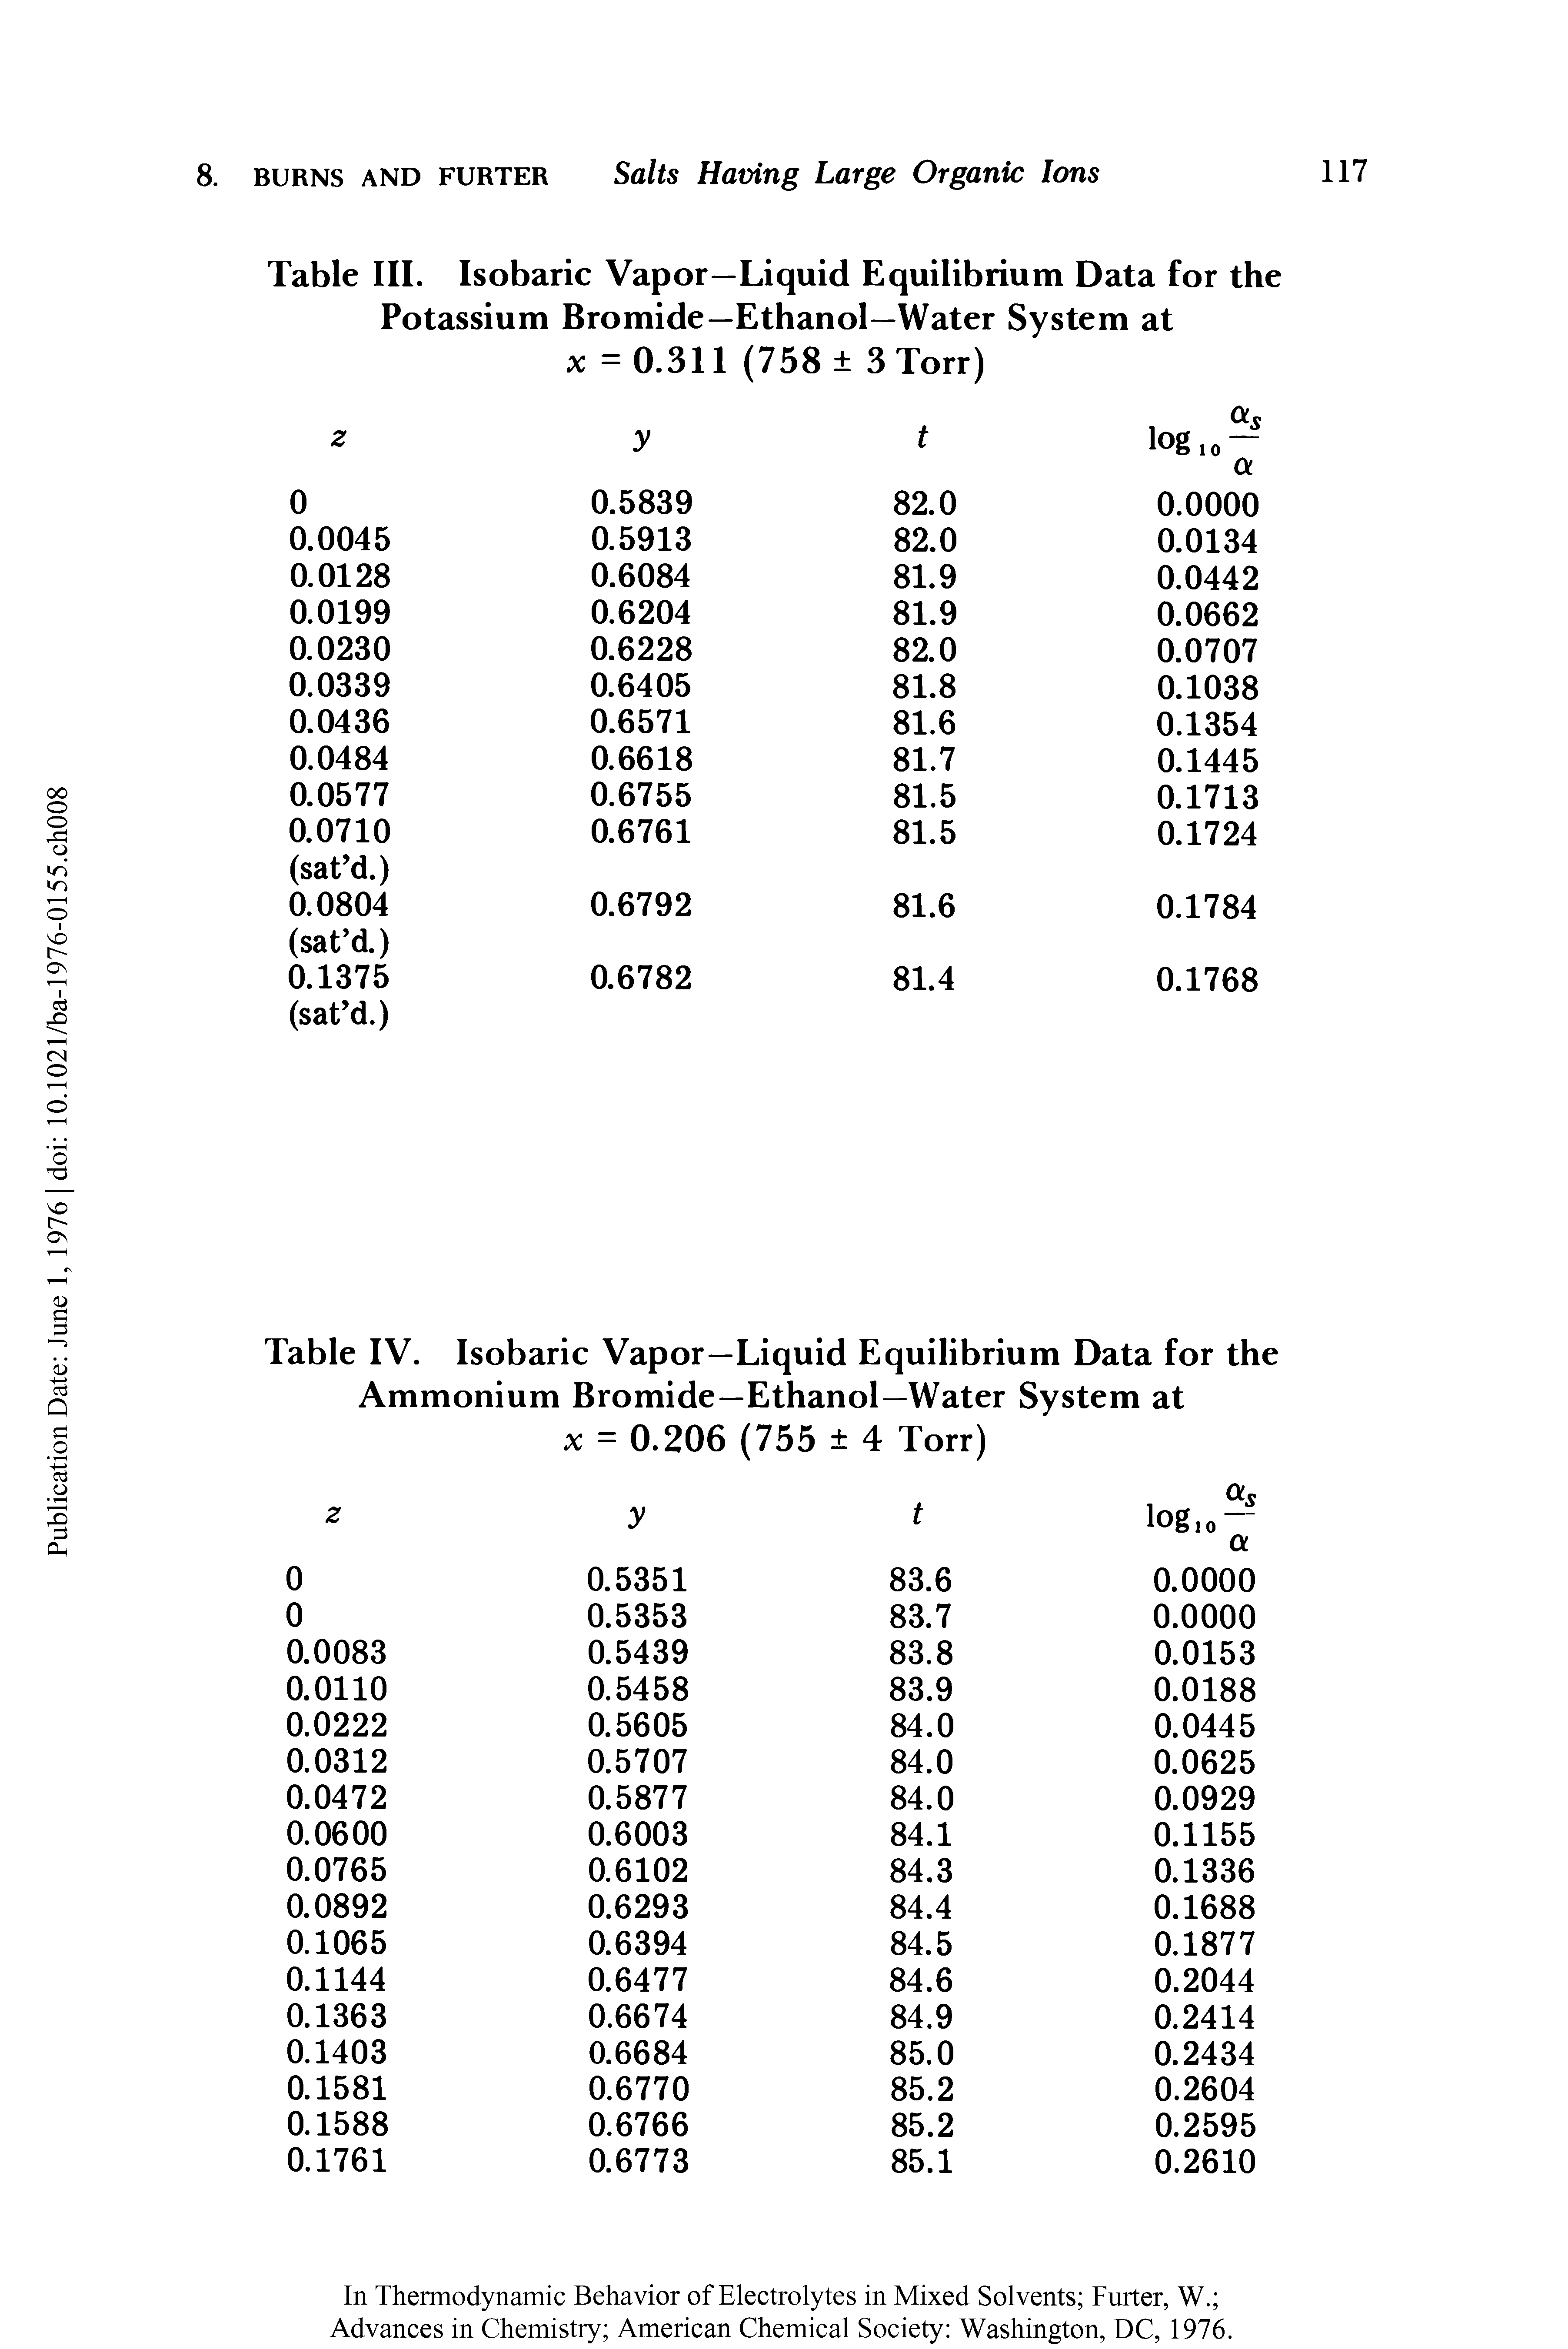 Table IV. Isobaric Vapor—Liquid Equilibrium Data for the Ammonium Bromide—Ethanol—Water System at x = 0.206 (755 4 Torr)...